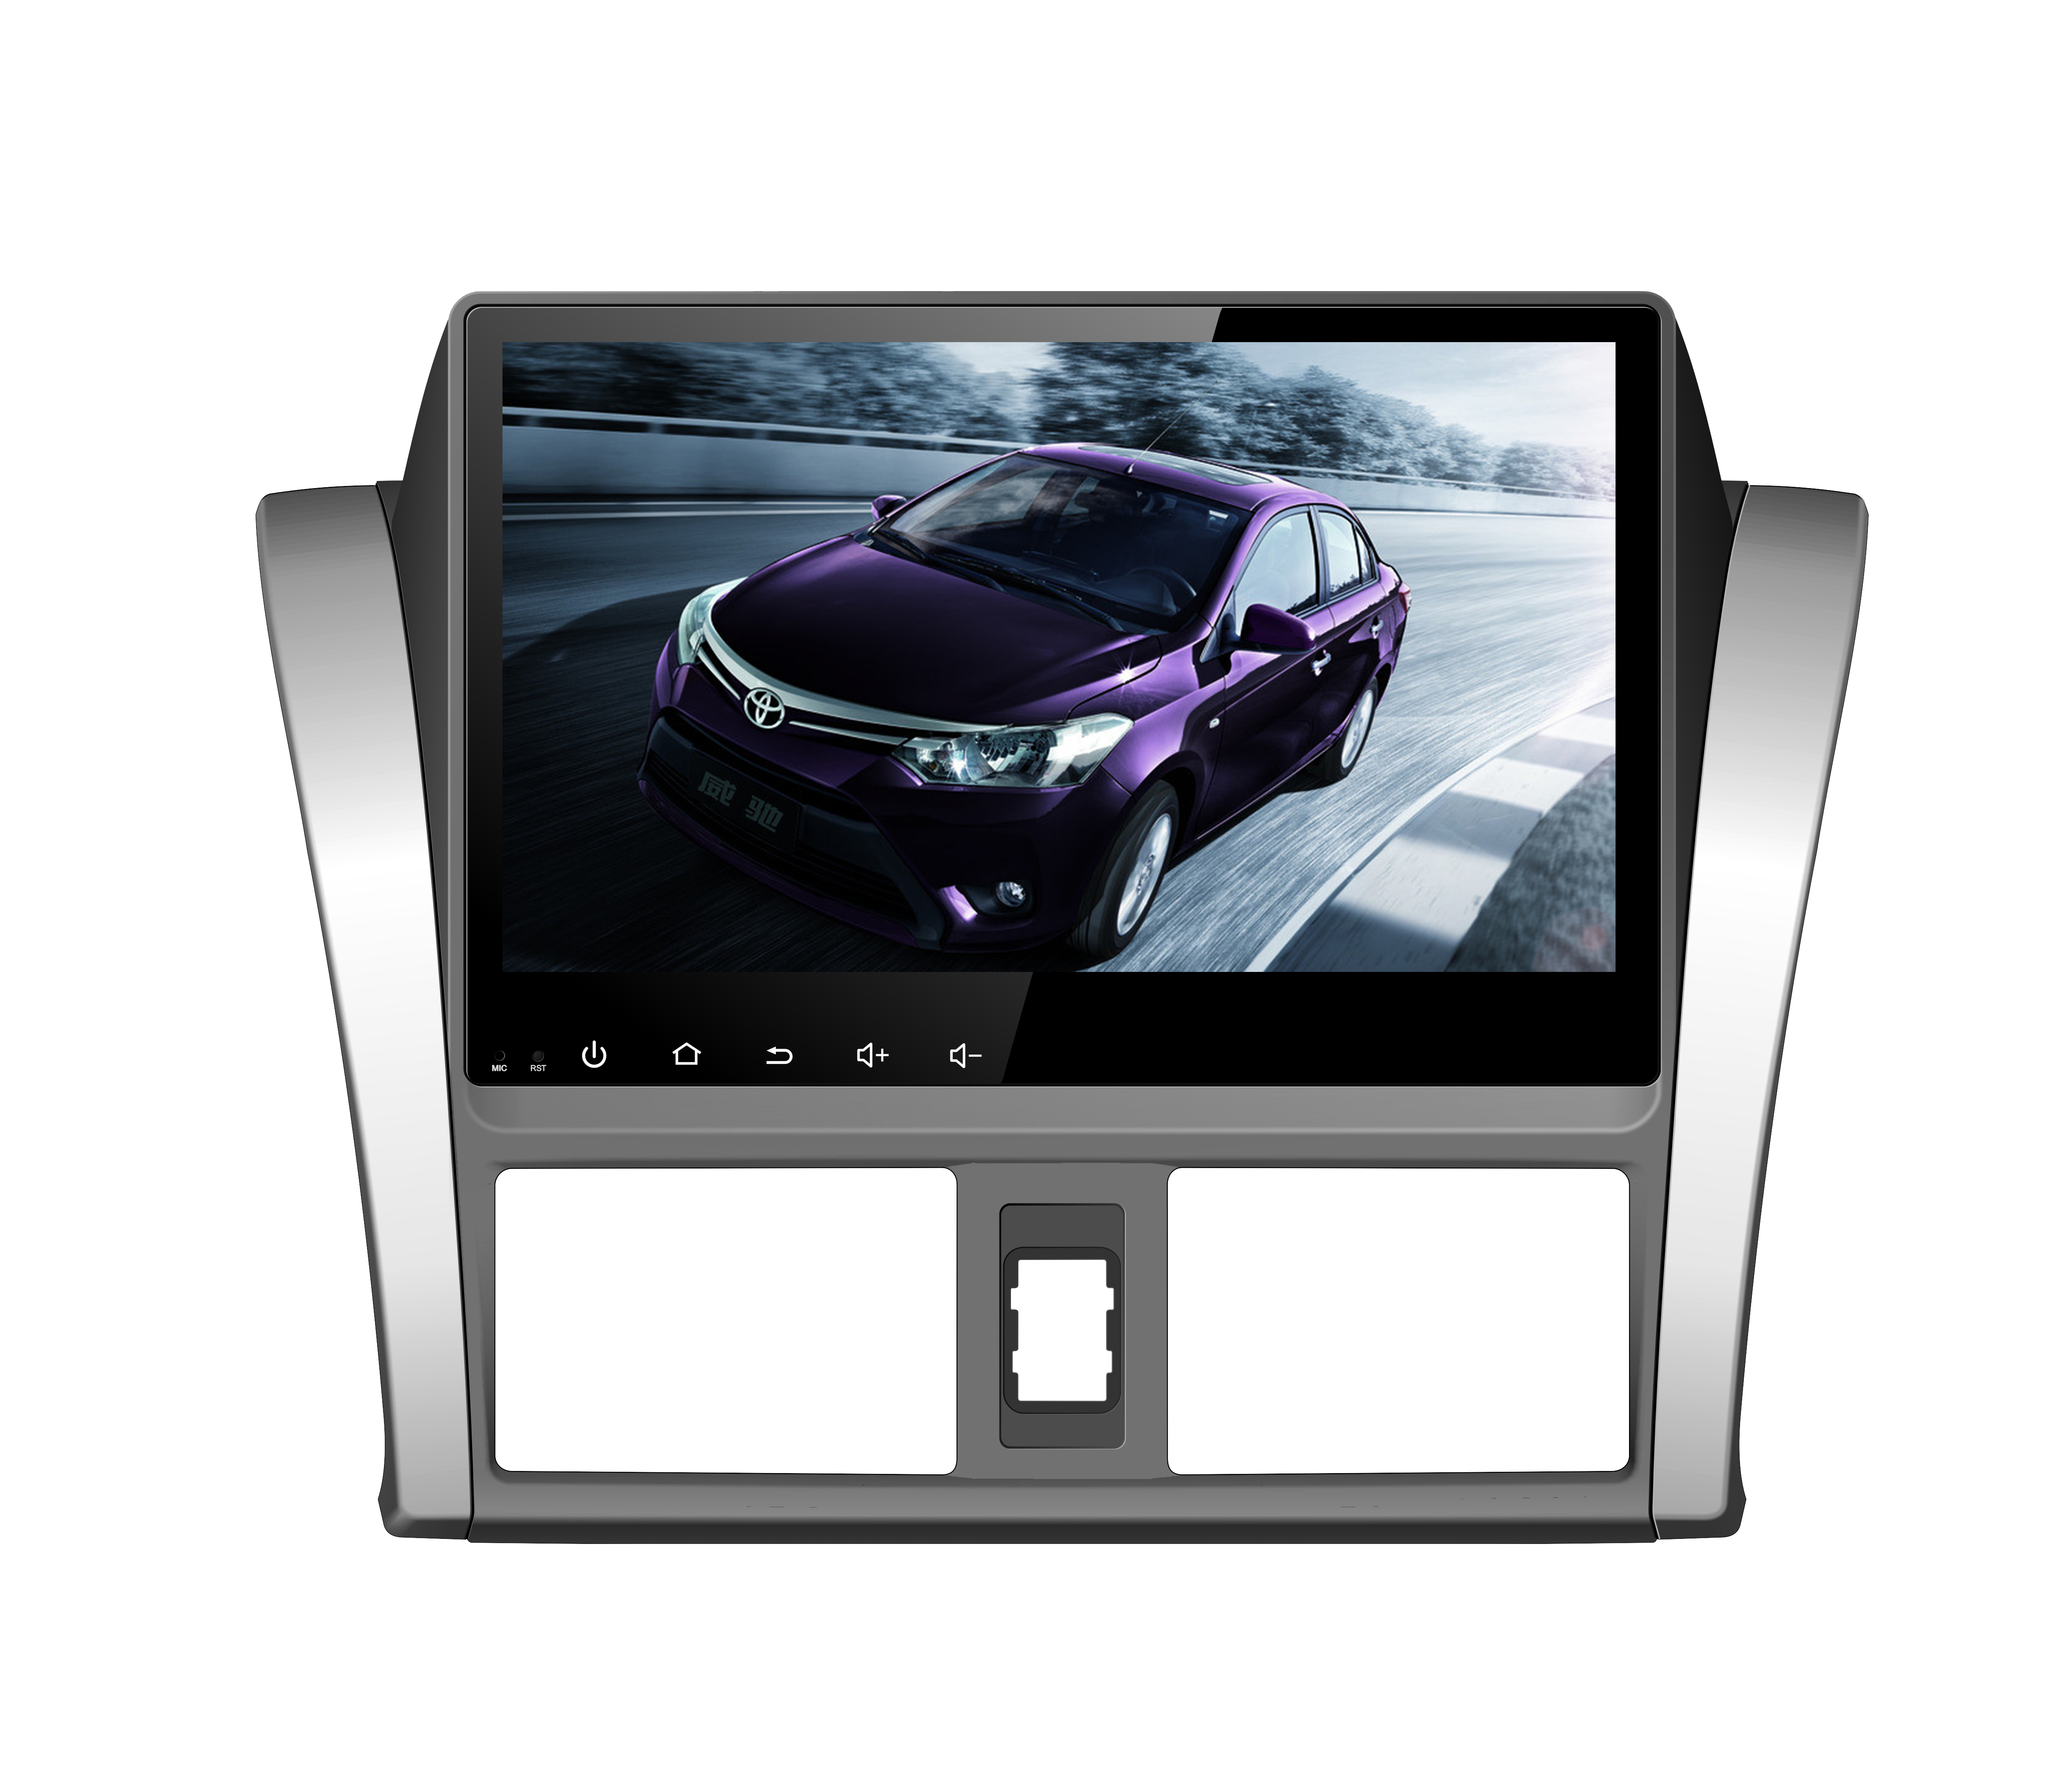 TOYOTA VIOS YARIS Sedan 10.1'' Capacitive Touch Screen Car PC Android 7.1/6.0 FM AM Radio Auto GPS navi Bluetooth Wifi Mirror link 2g 32g Quad/Eight Cores